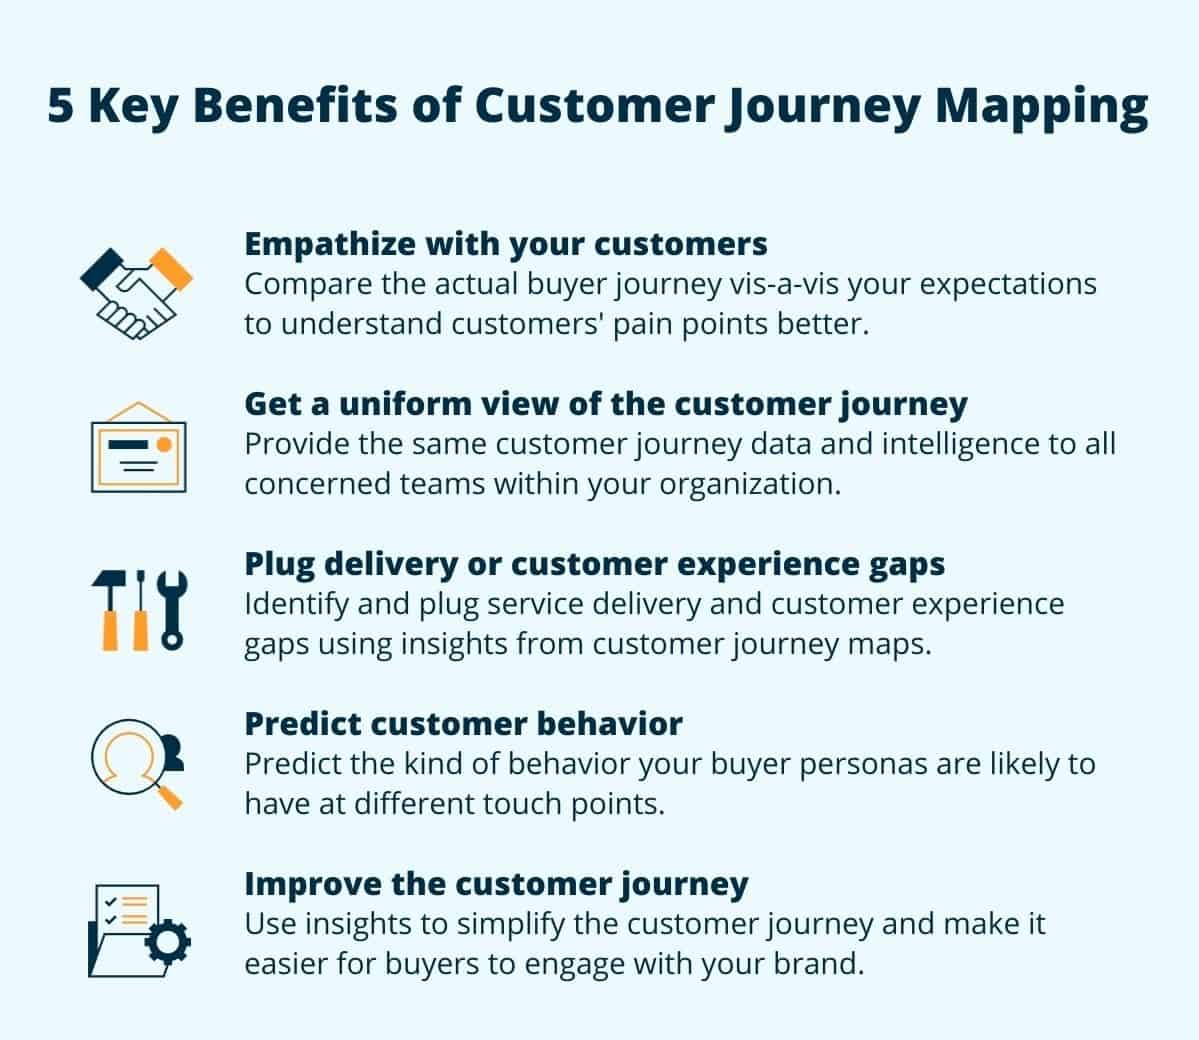 purpose of the customer journey